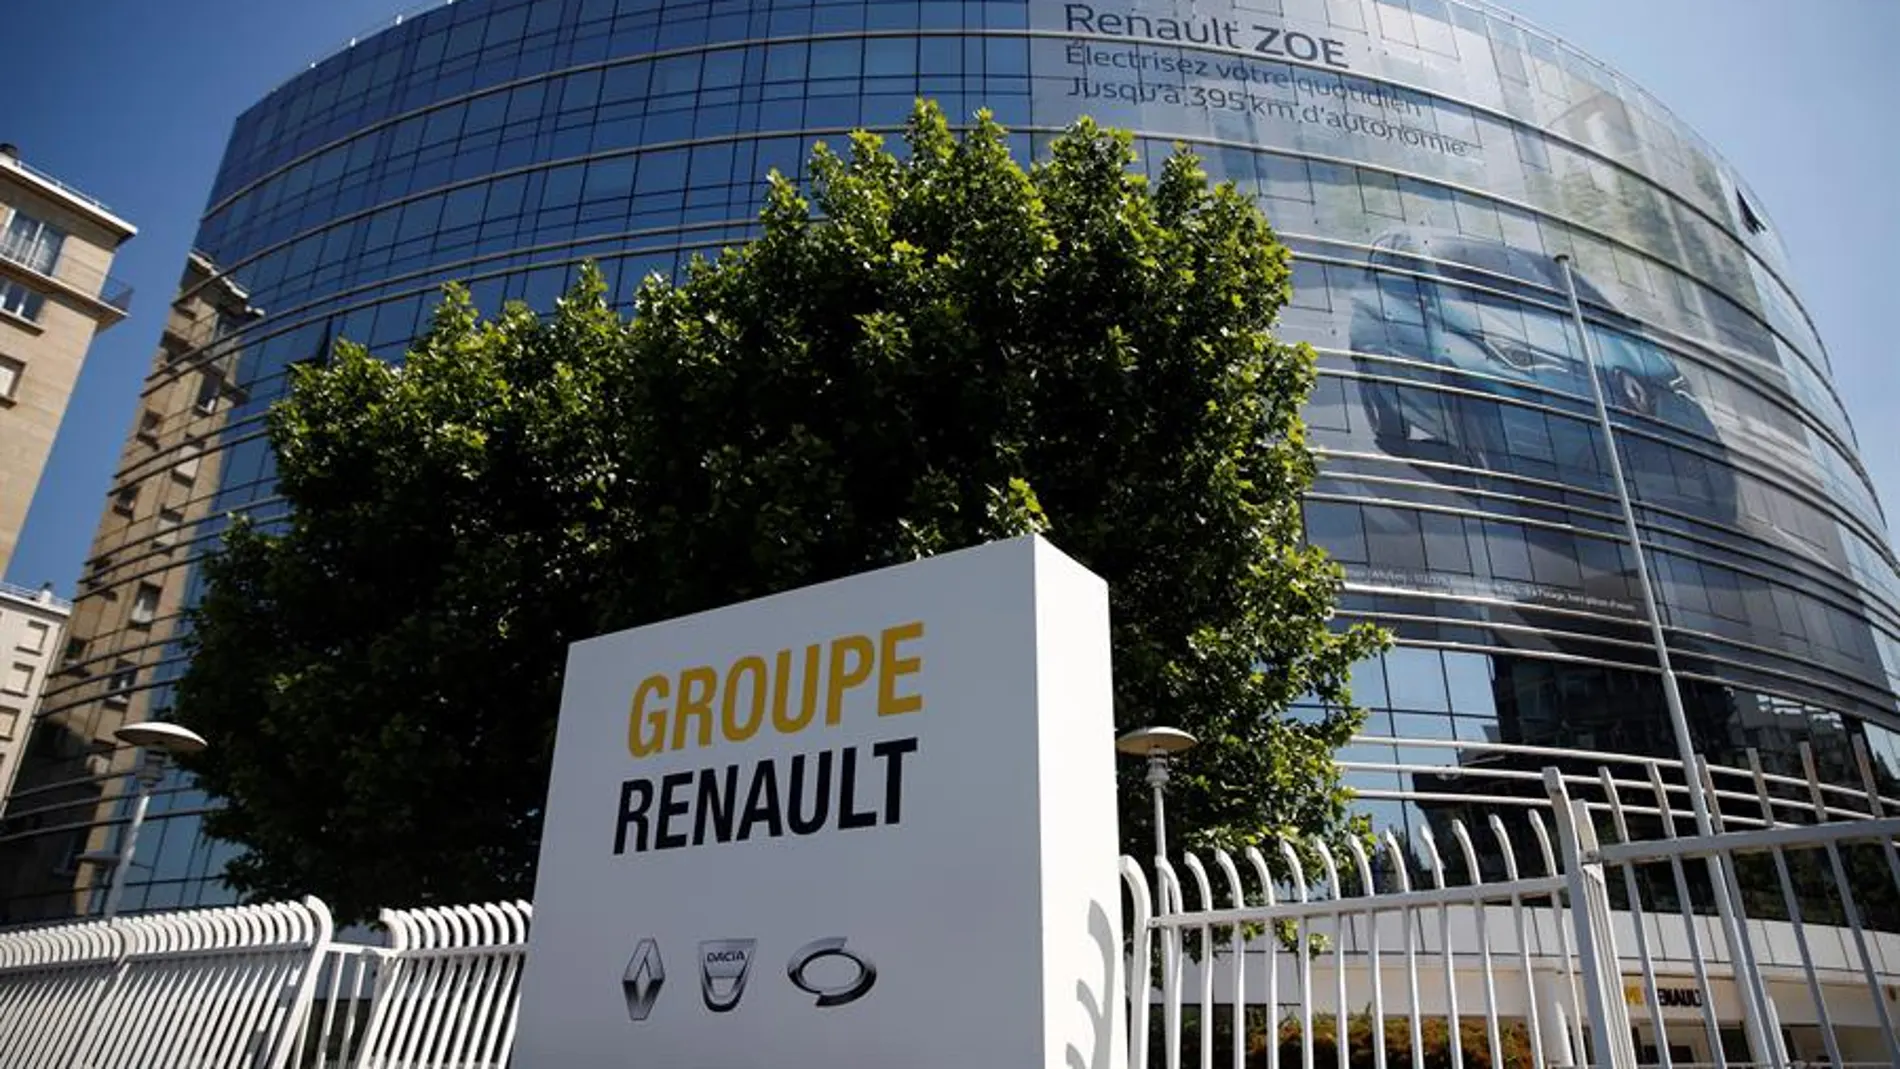 Sede central del Grupo Renault en Boulogne Billancourt, cerca de Paris.